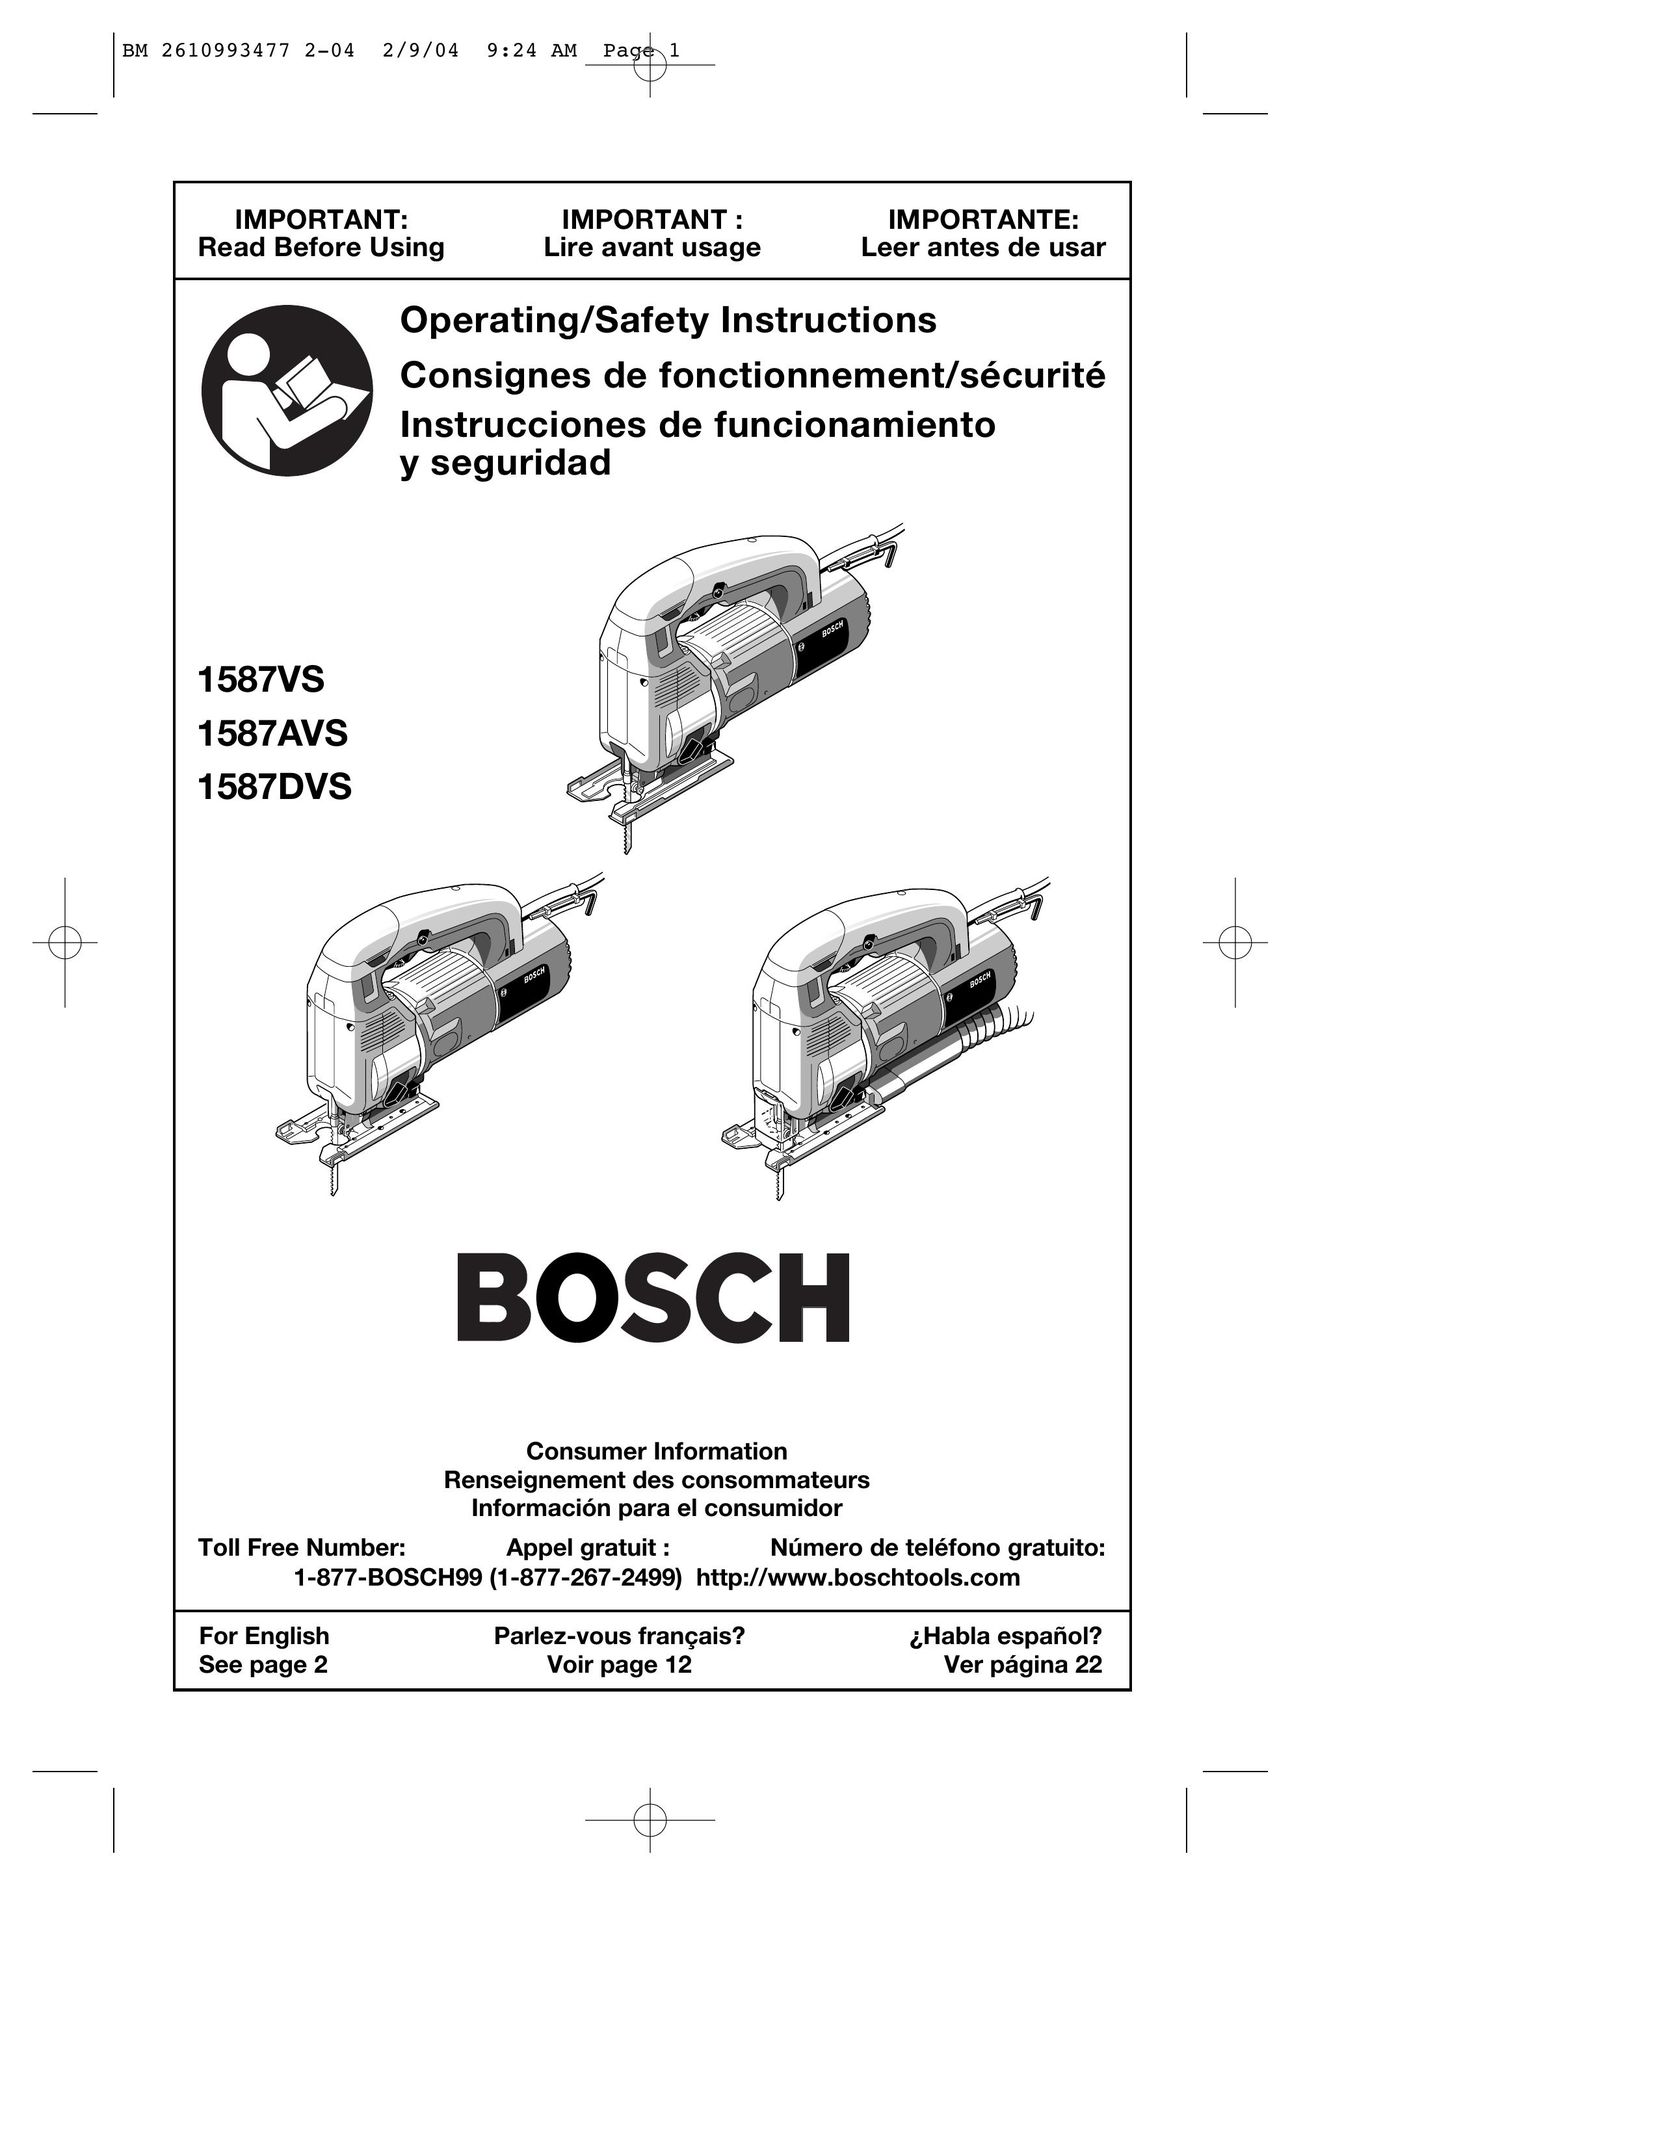 Bosch Power Tools 1587DVS Saw User Manual